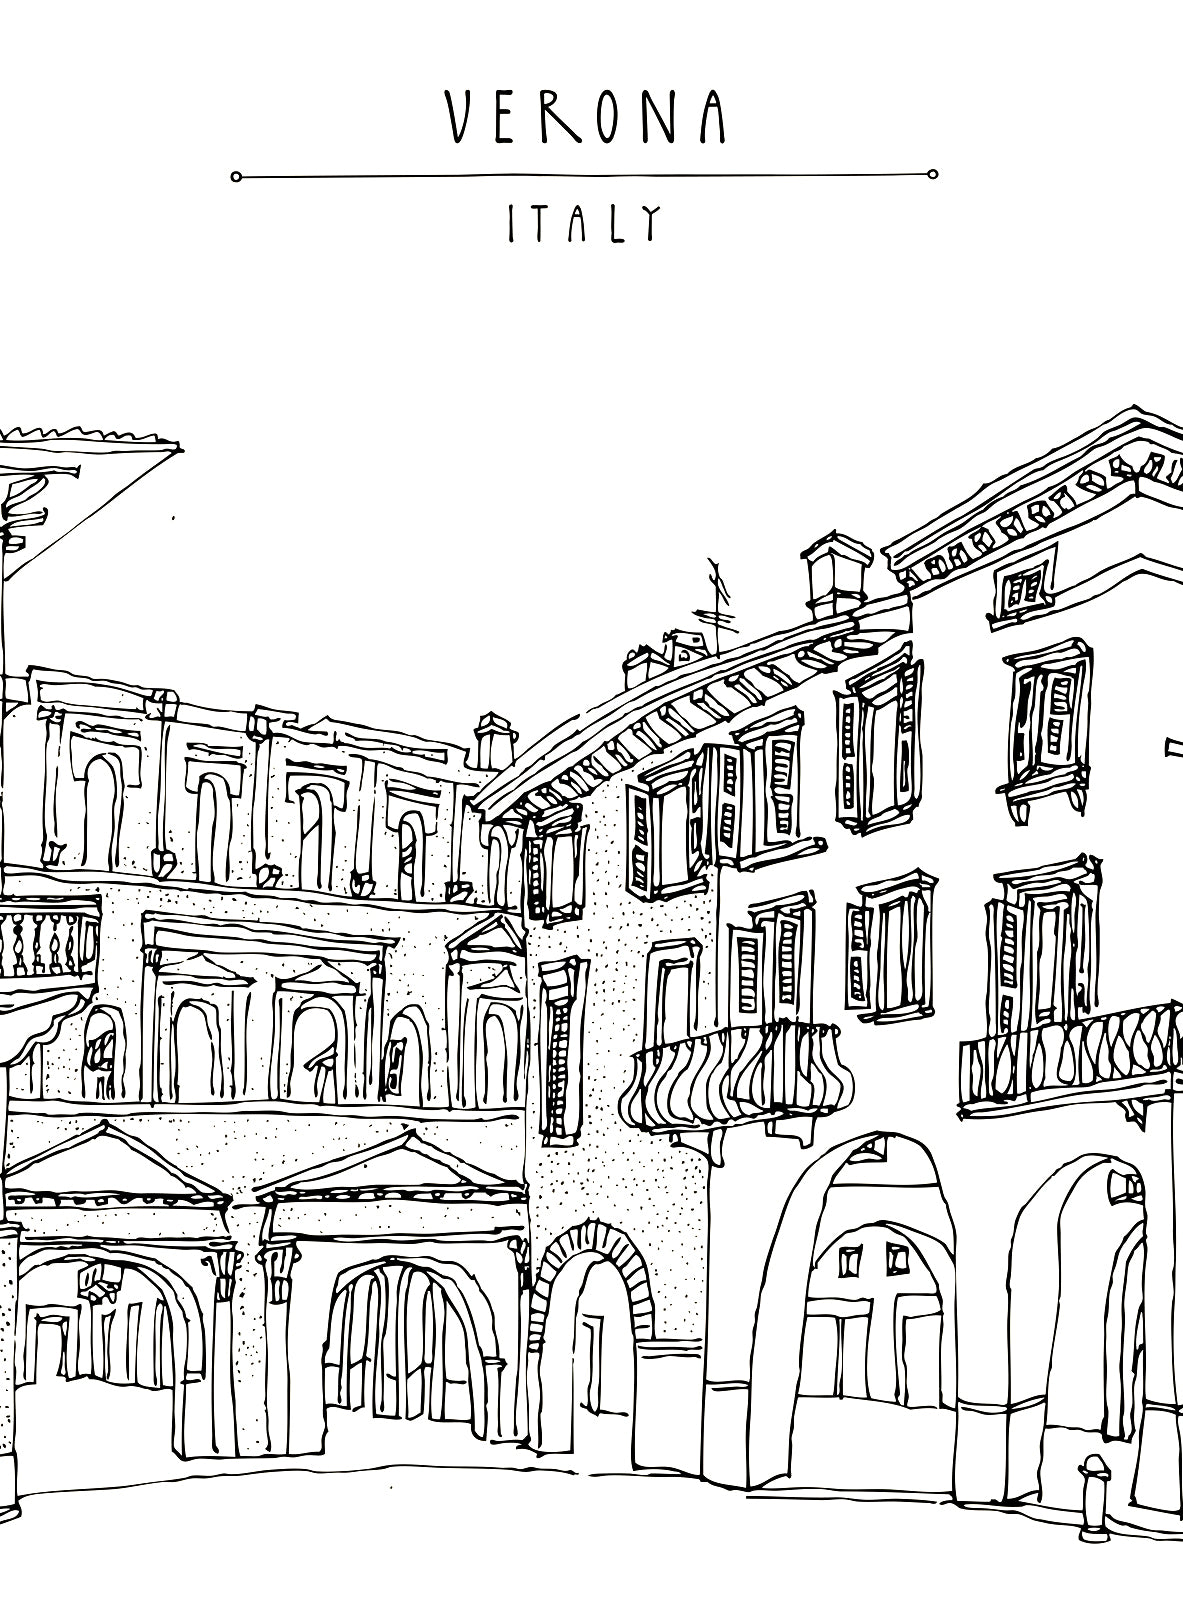 Italian Houses - Architecture Coloring Book, European Urban Street Landscapes Rachel Mintz